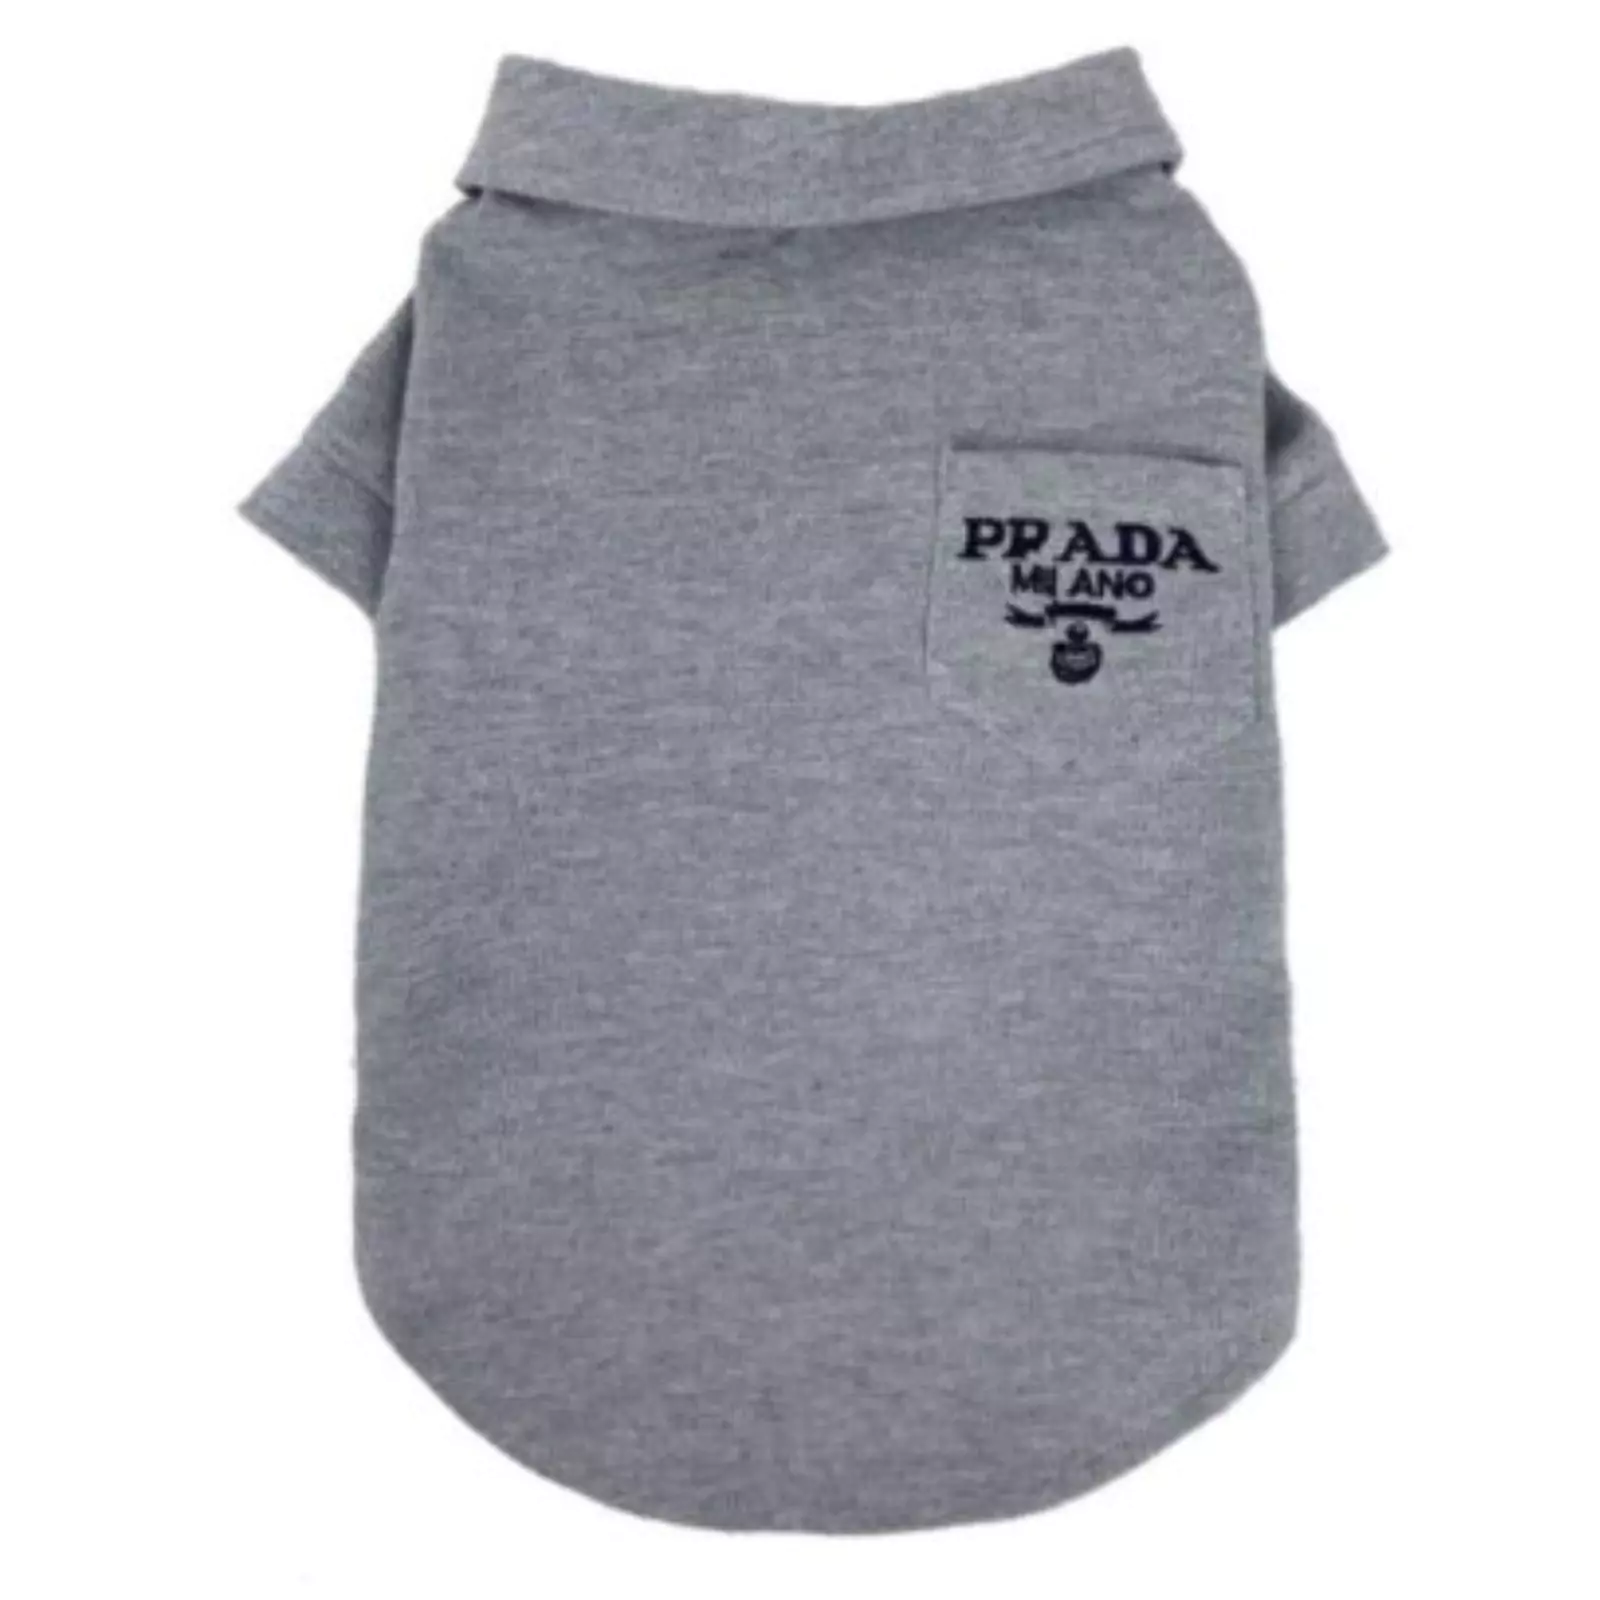 pawda grey short sleeve